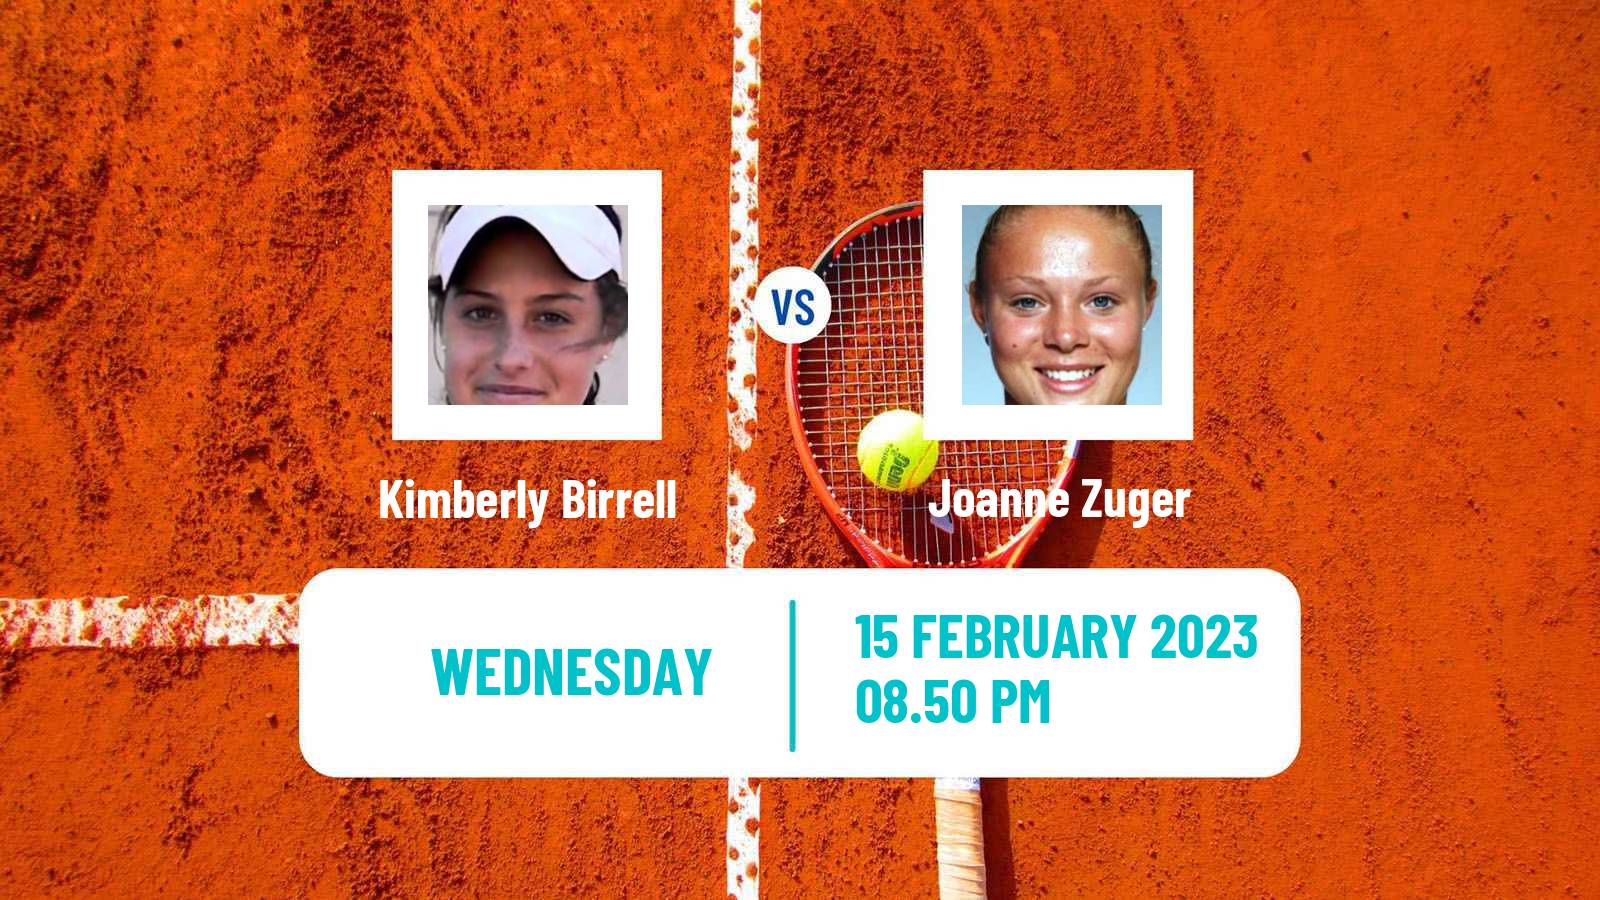 Tennis ITF Tournaments Kimberly Birrell - Joanne Zuger